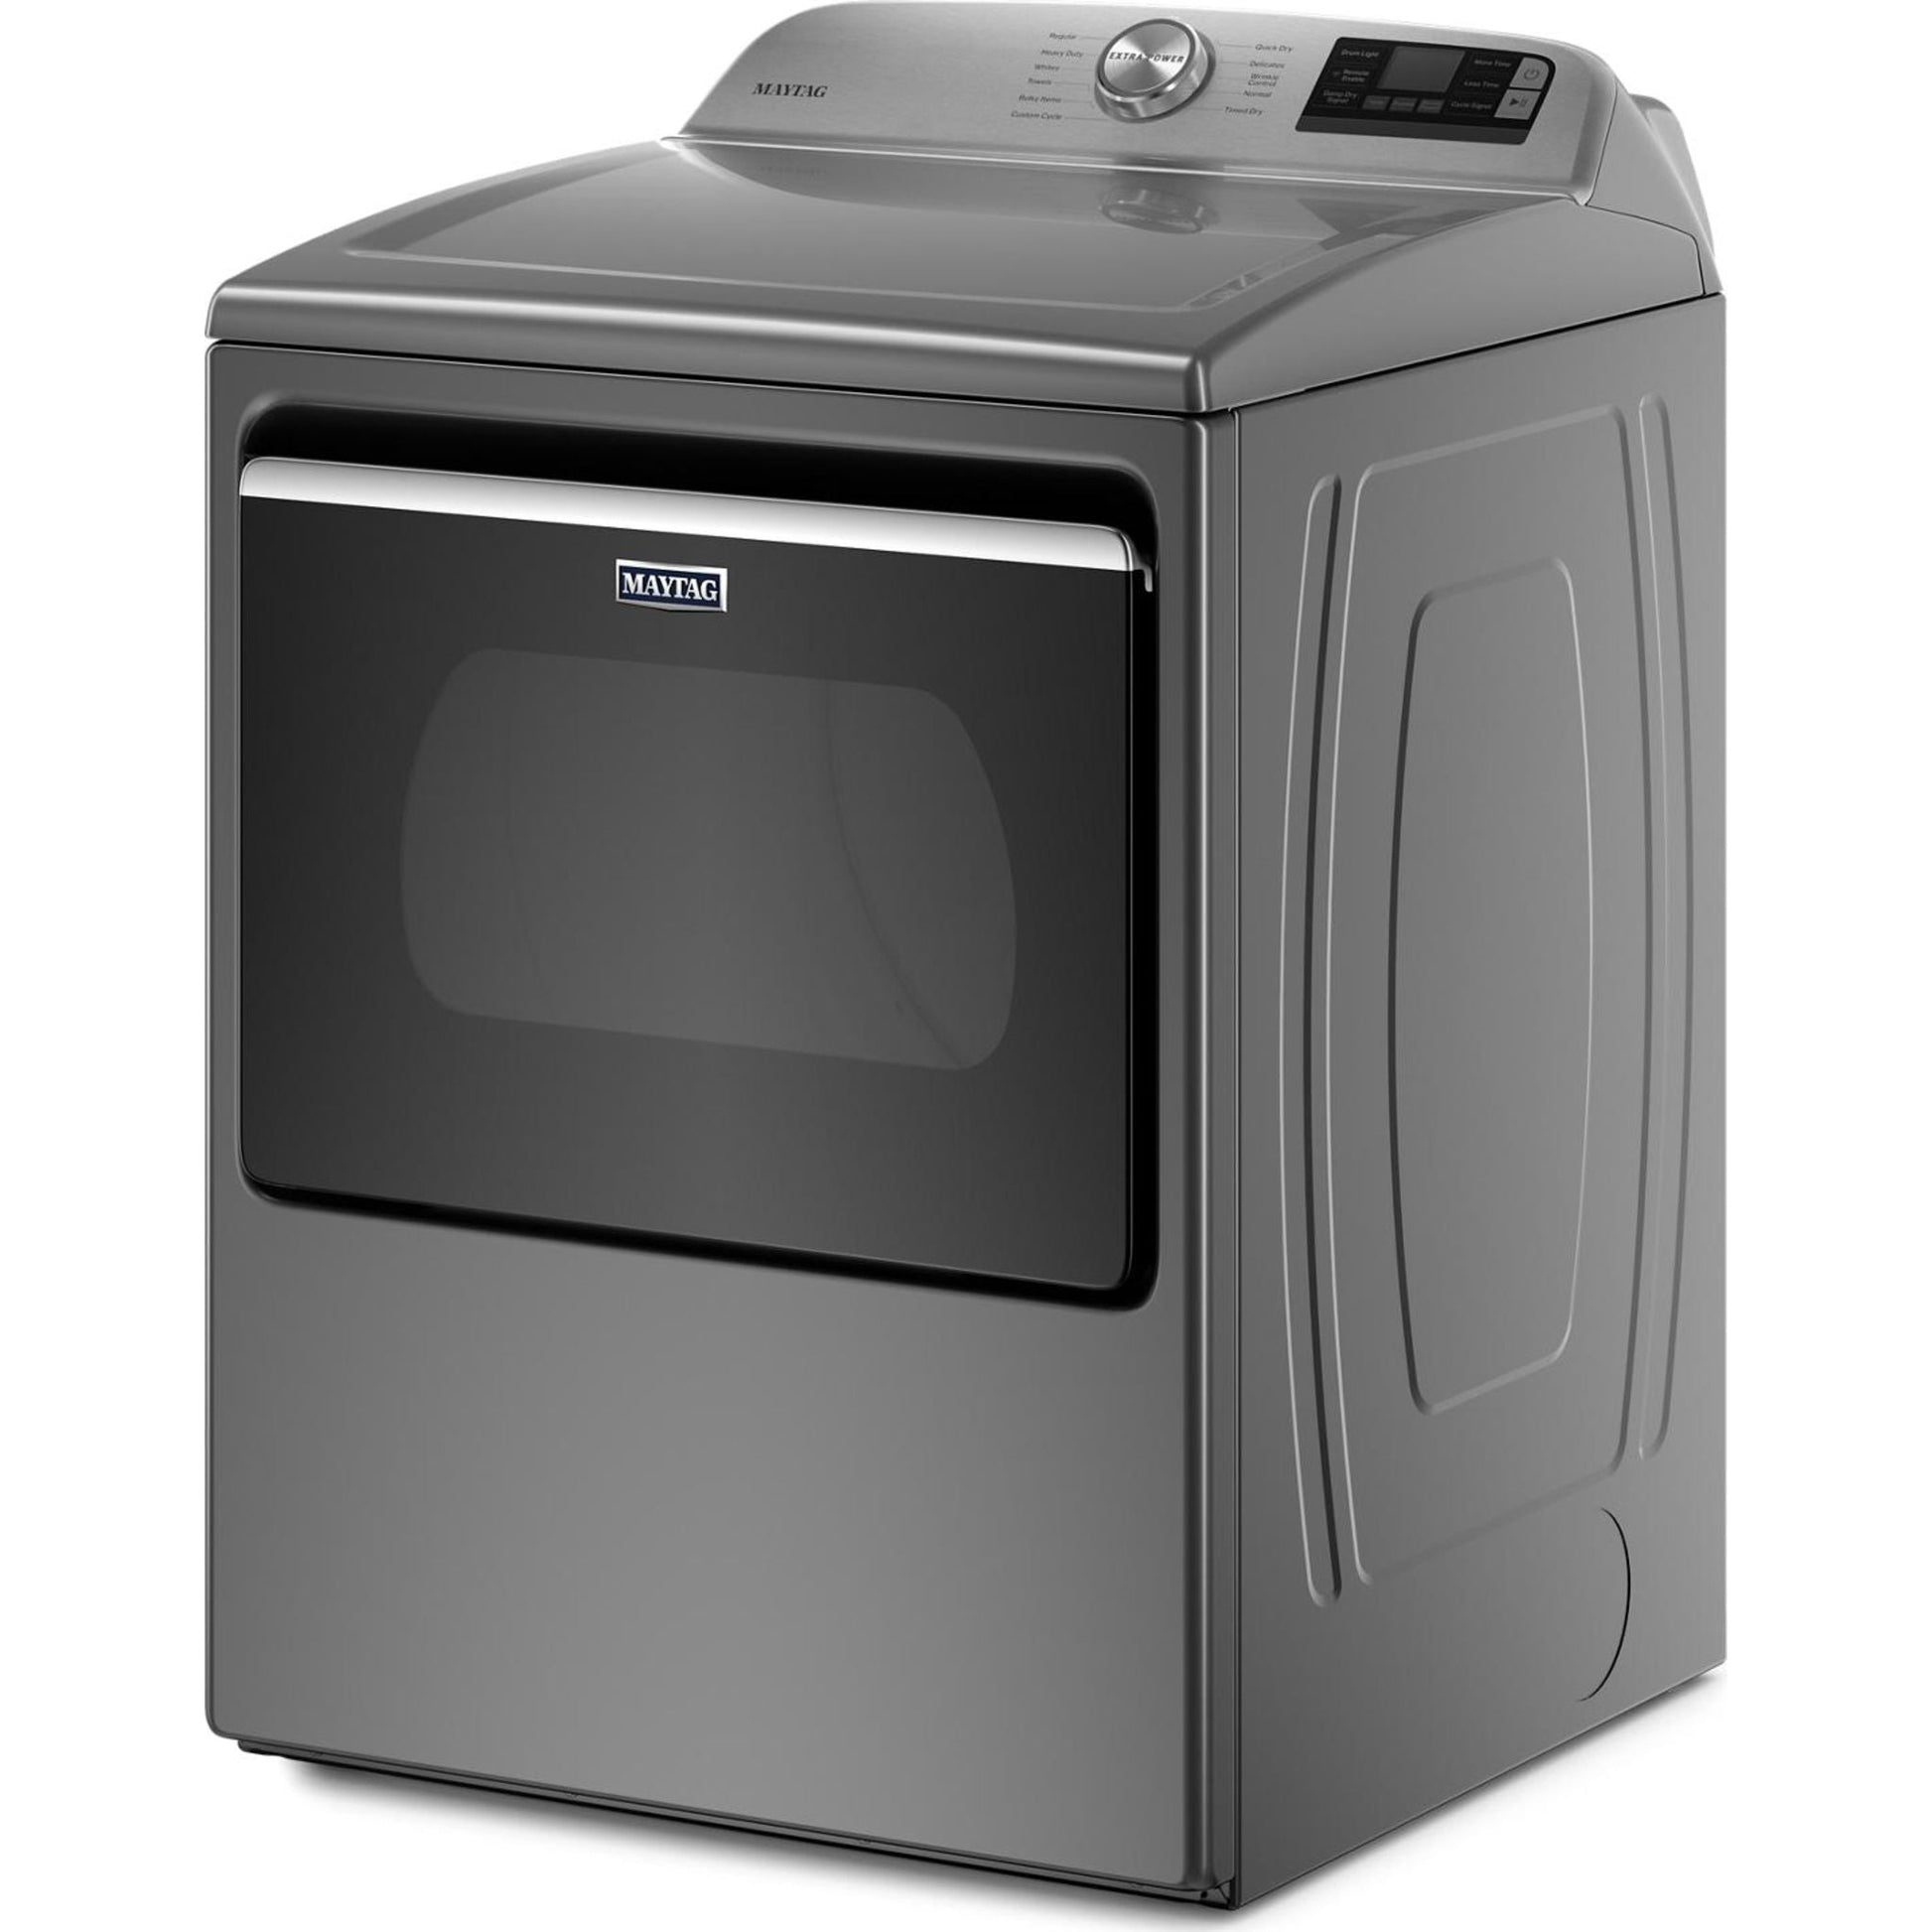 Maytag Dryer (YMED6230HC) - Metallic Slate